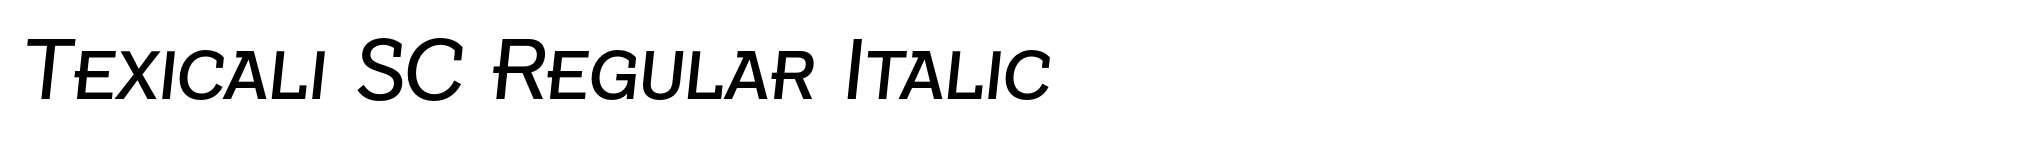 Texicali SC Regular Italic image